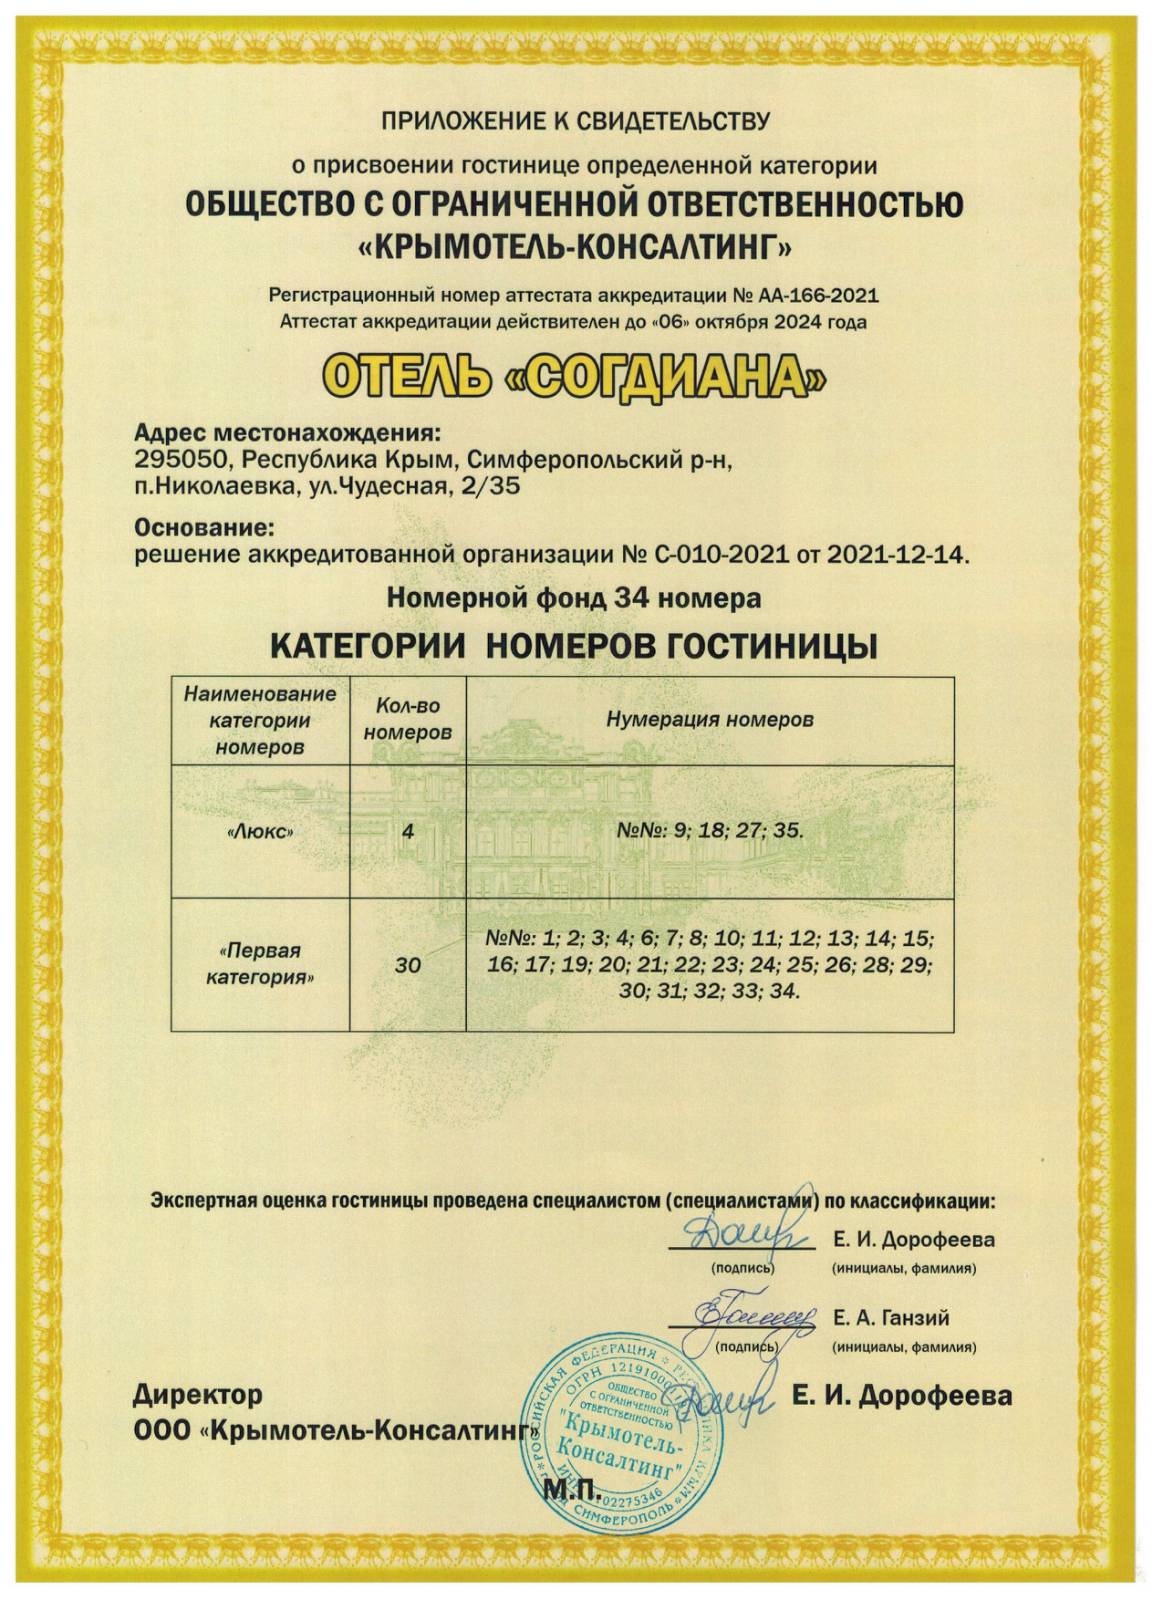 Сертификат звездности отеля «Согдиана» фото